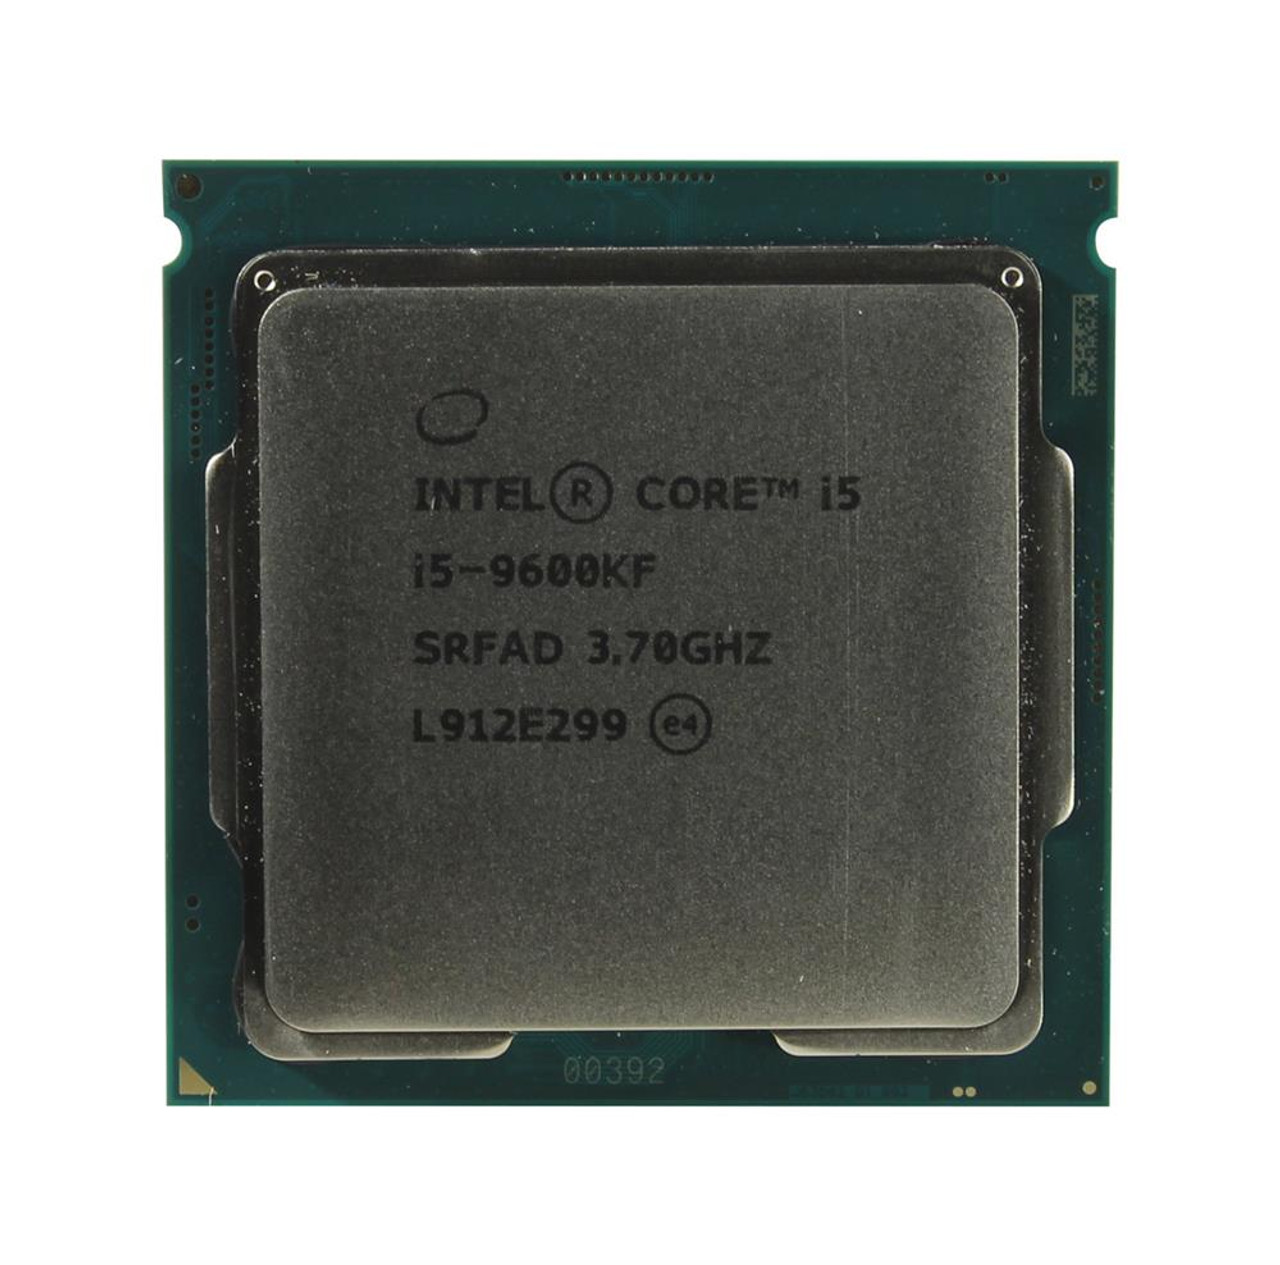 intel core i5-9600kf @ 3.70ghz